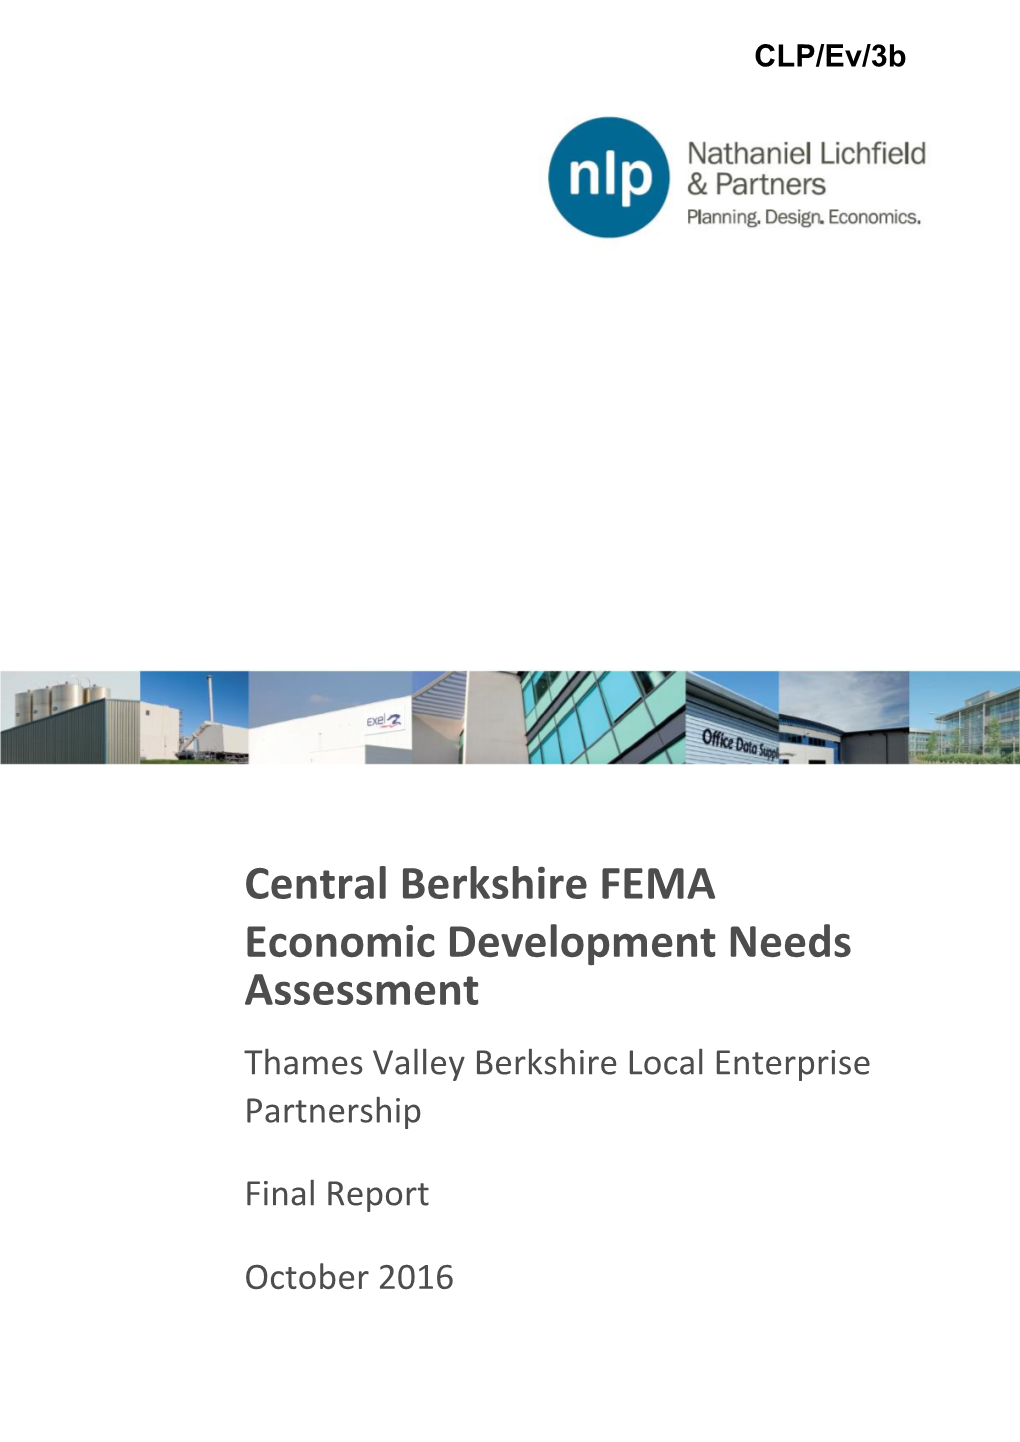 Central Berkshire FEMA Economic Development Needs Assessment